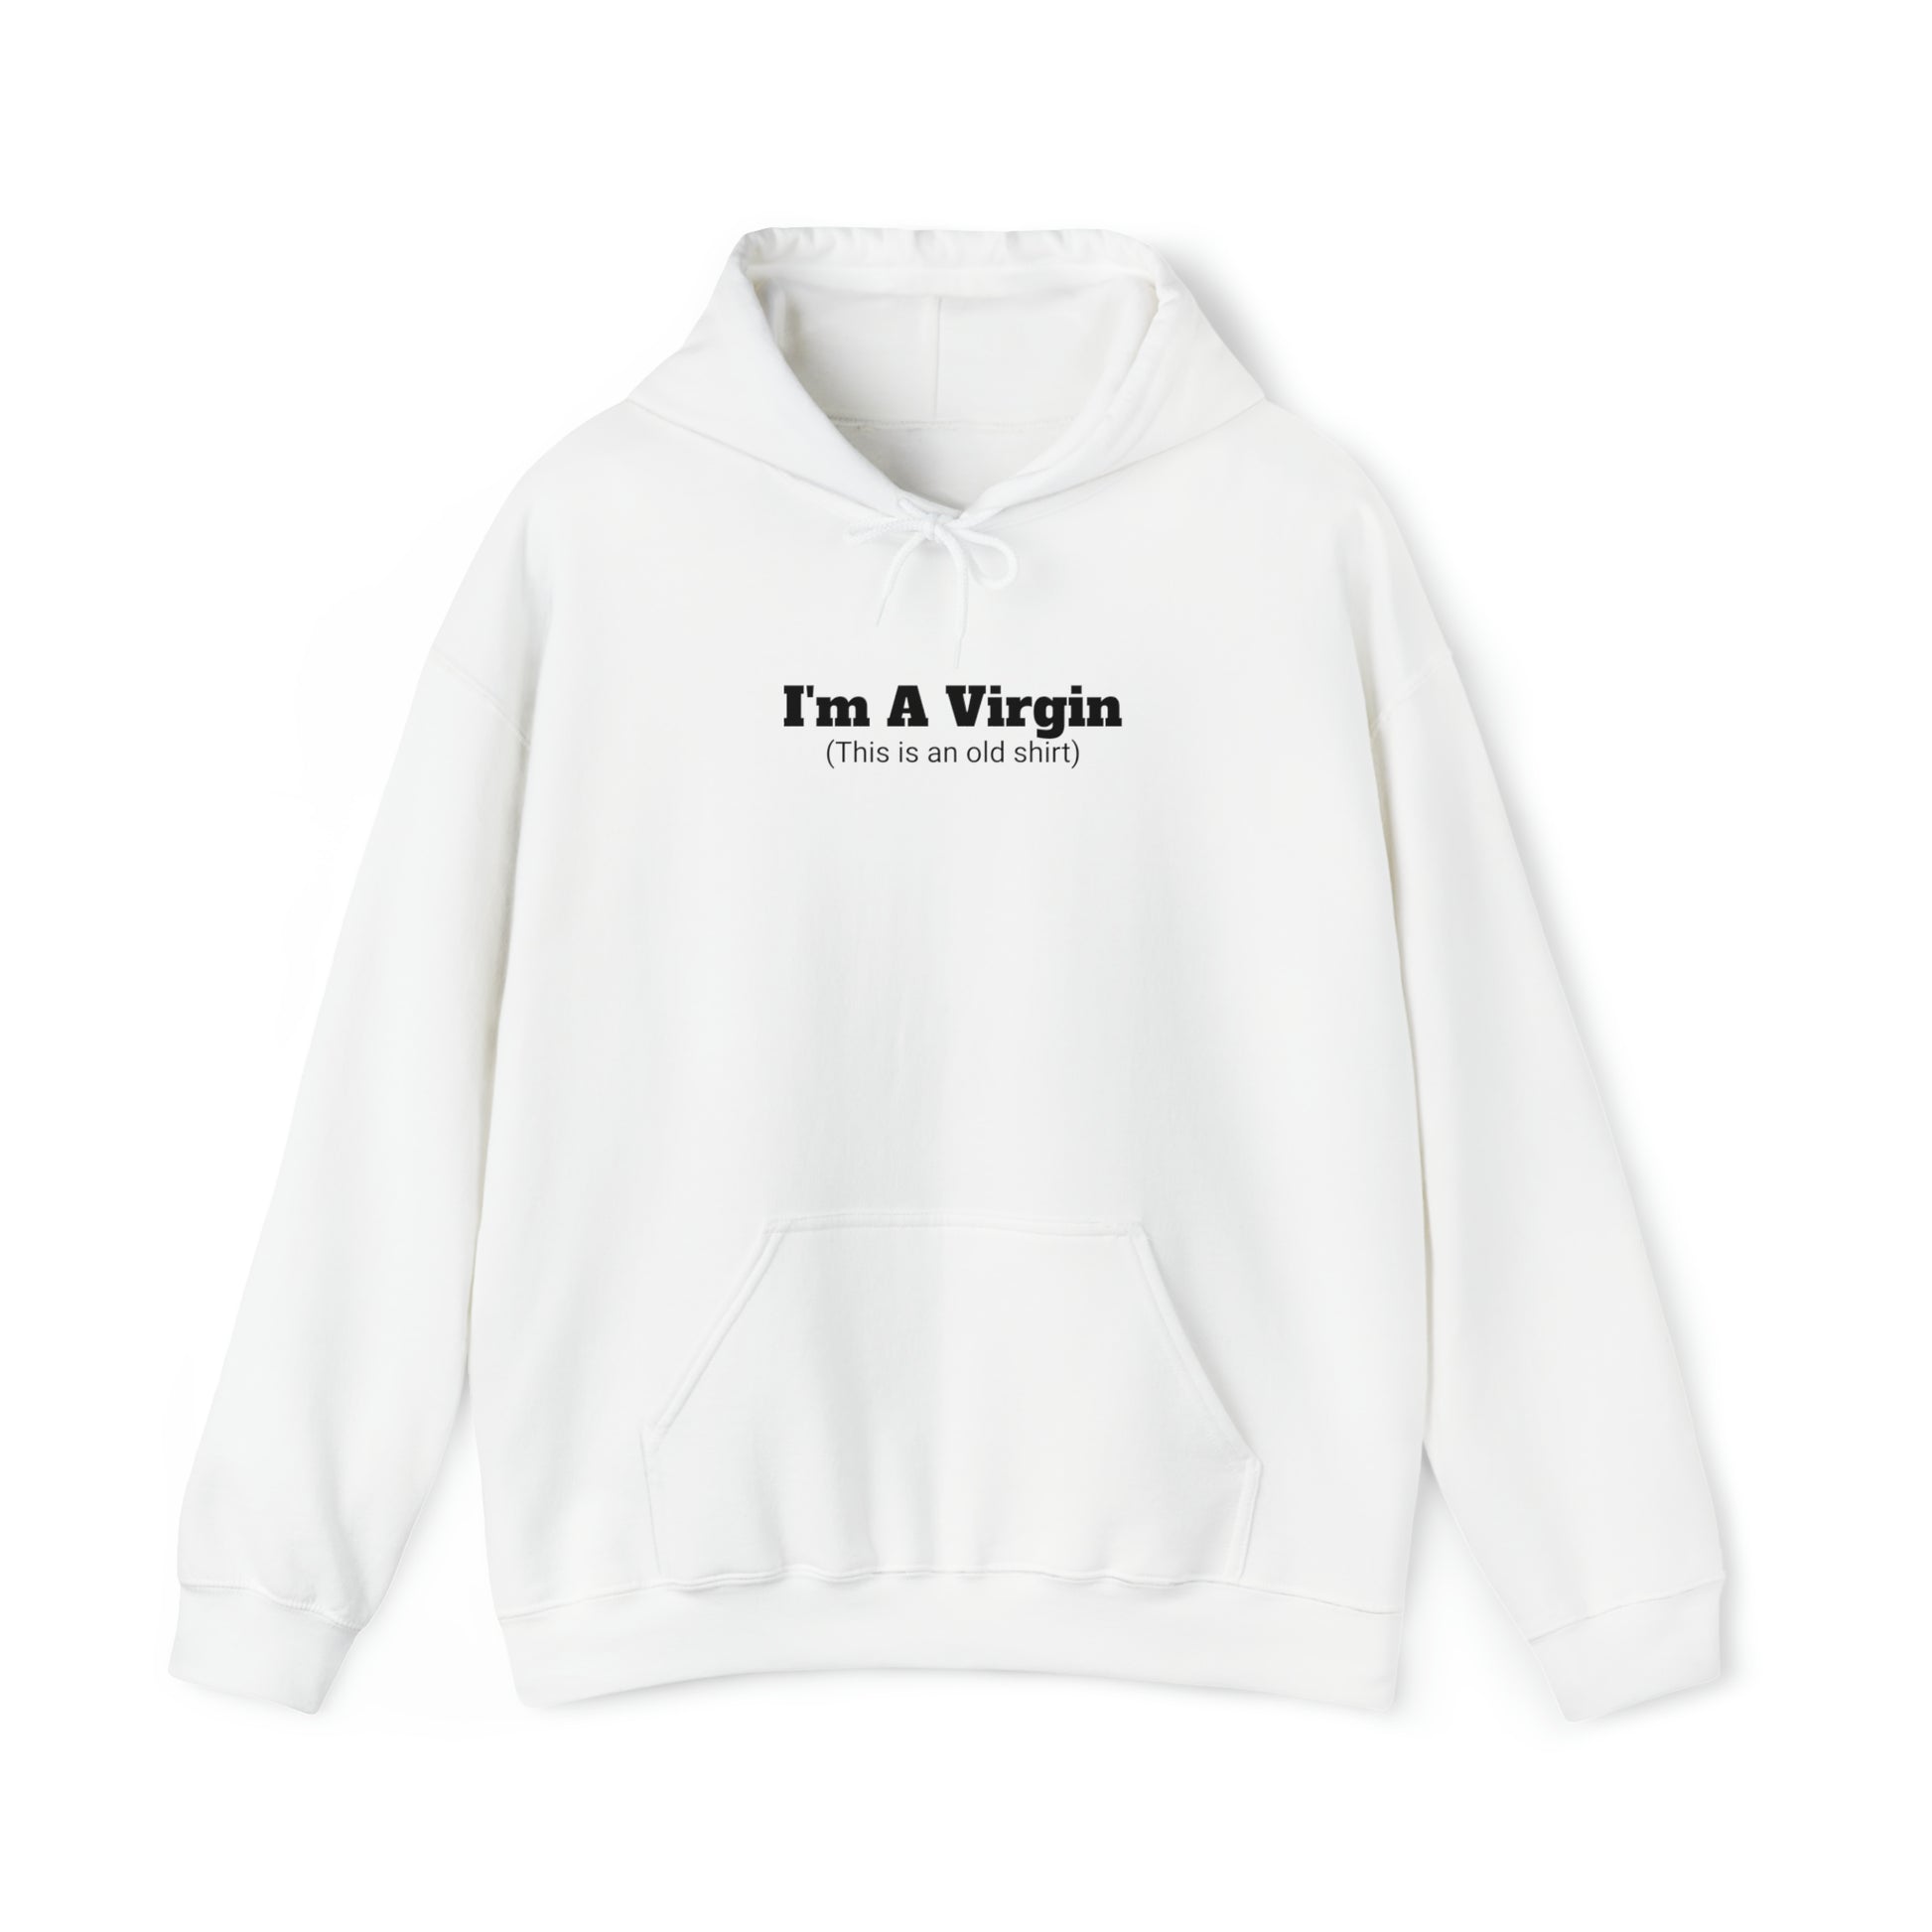 I'm A Virgin Sweatshirt White